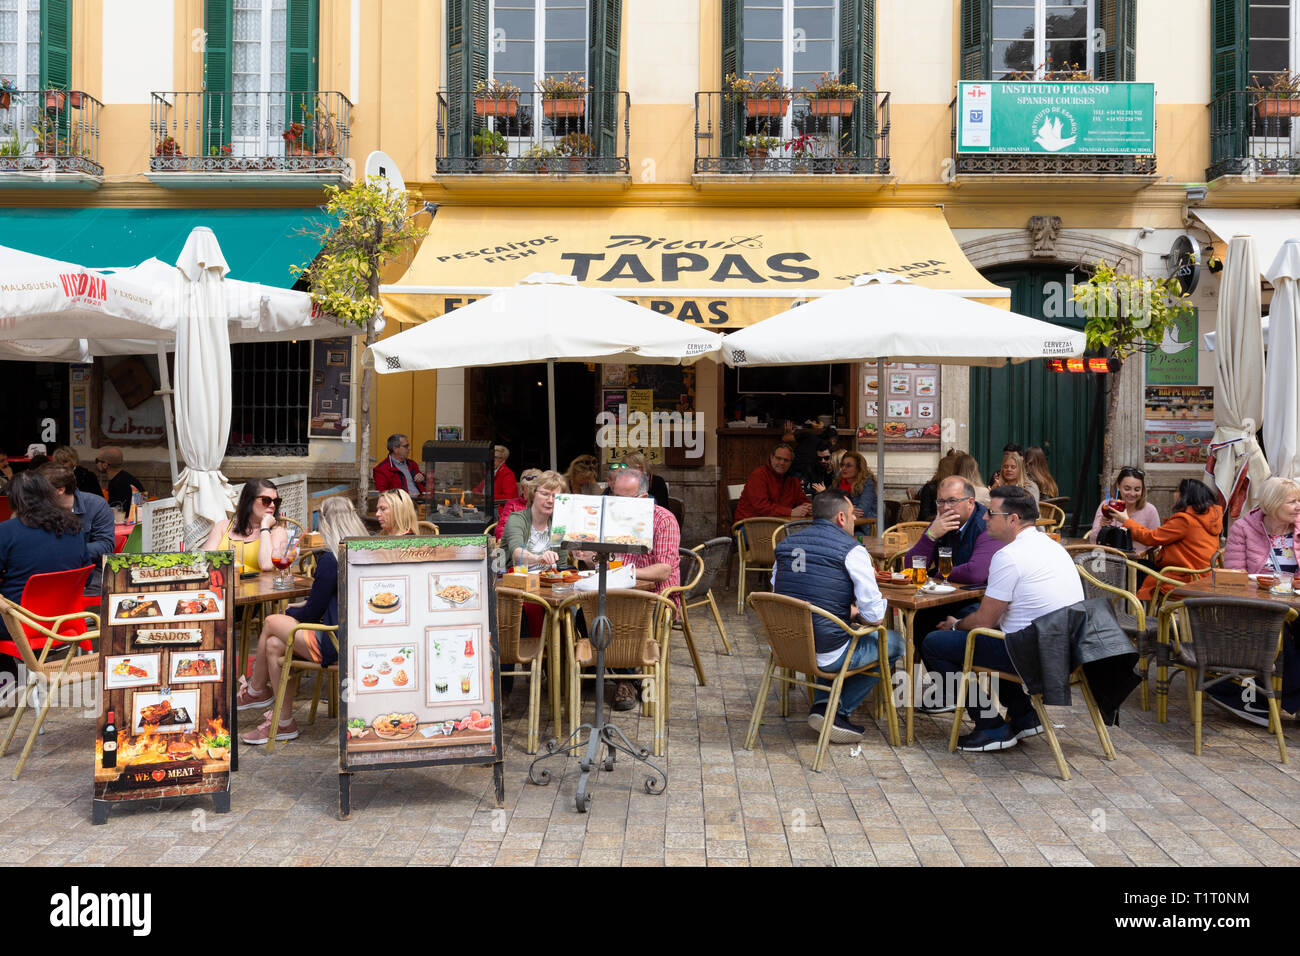 Malaga Tapas Restaurant - Essen in einer Tapas Bar, Plaza de la Merced, Malaga Altstadt, Andalusien Spanien Stockfoto